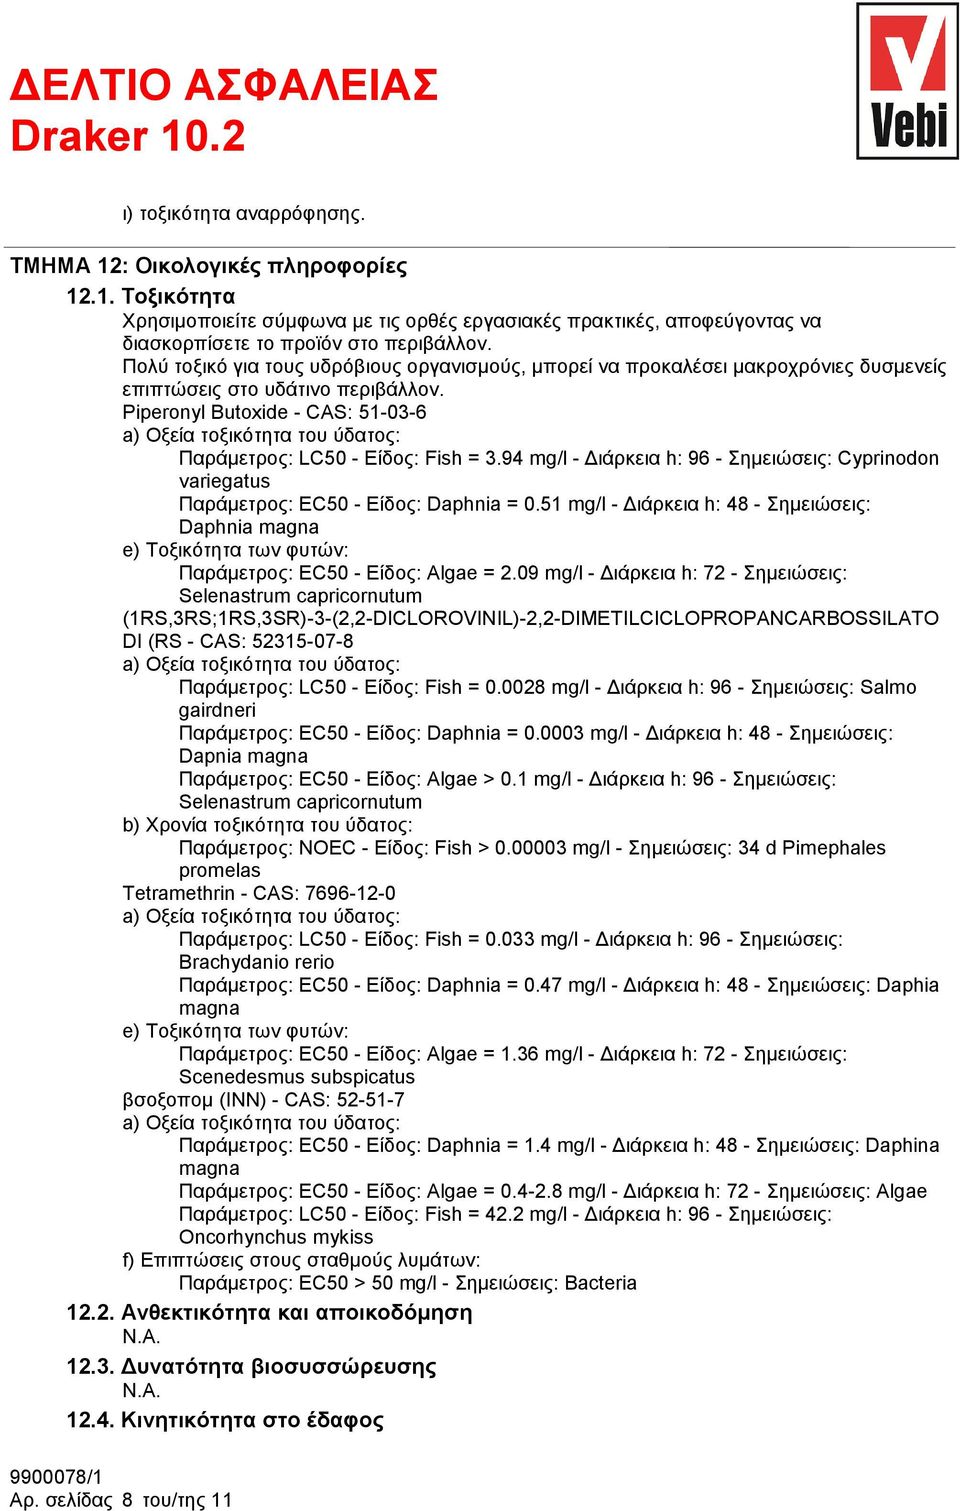 Piperonyl Butoxide - CAS: 51-03-6 a) Οξεία τοξικότητα του ύδατος: Παράμετρος: LC50 - Είδος: Fish = 3.94 mg/l - Διάρκεια h: 96 - Σημειώσεις: Cyprinodon variegatus Παράμετρος: EC50 - Είδος: Daphnia = 0.